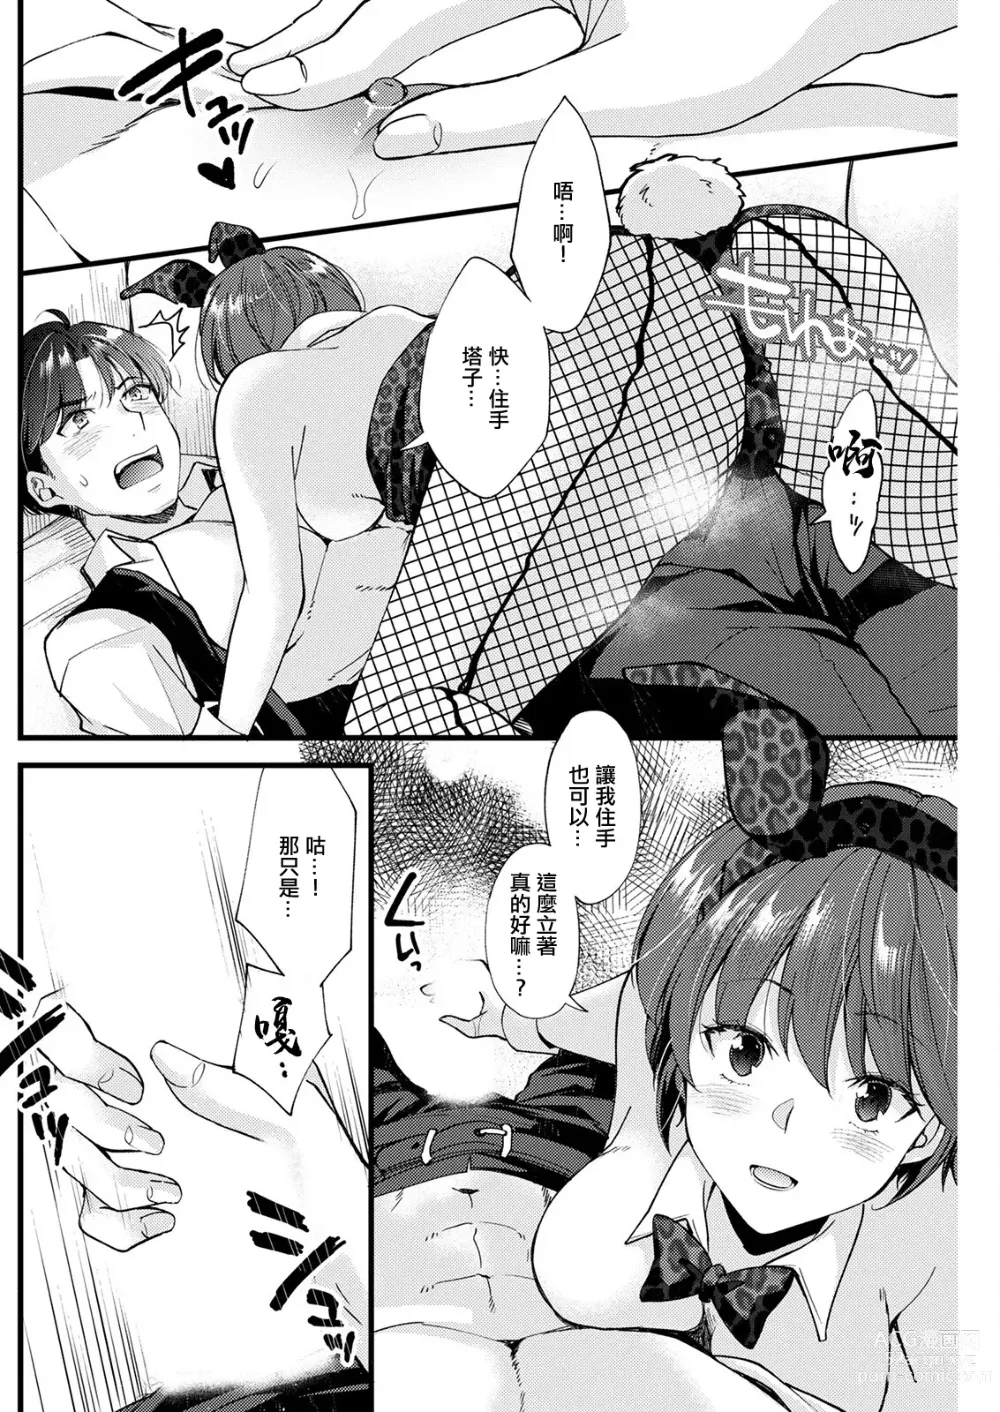 Page 6 of manga Tadaima tte Iwasete